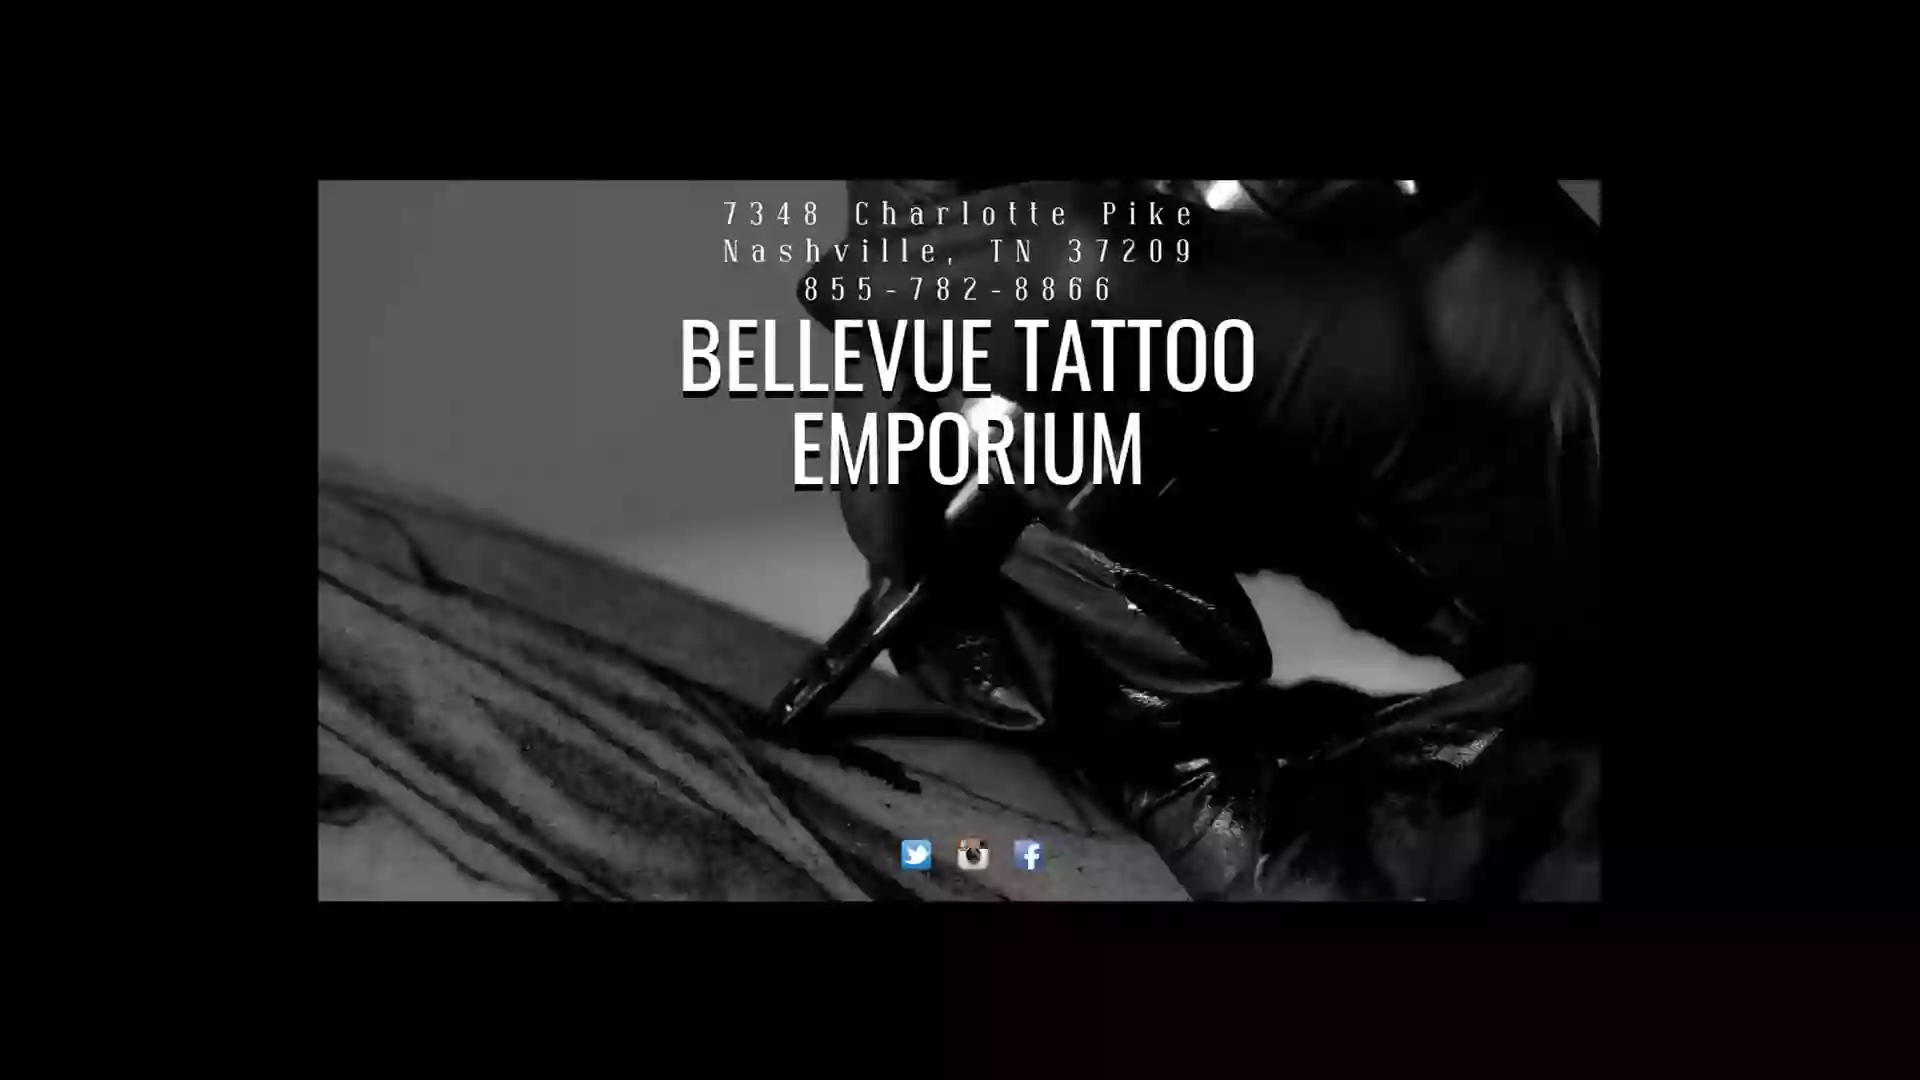 Bellevue Tattoo Emporium